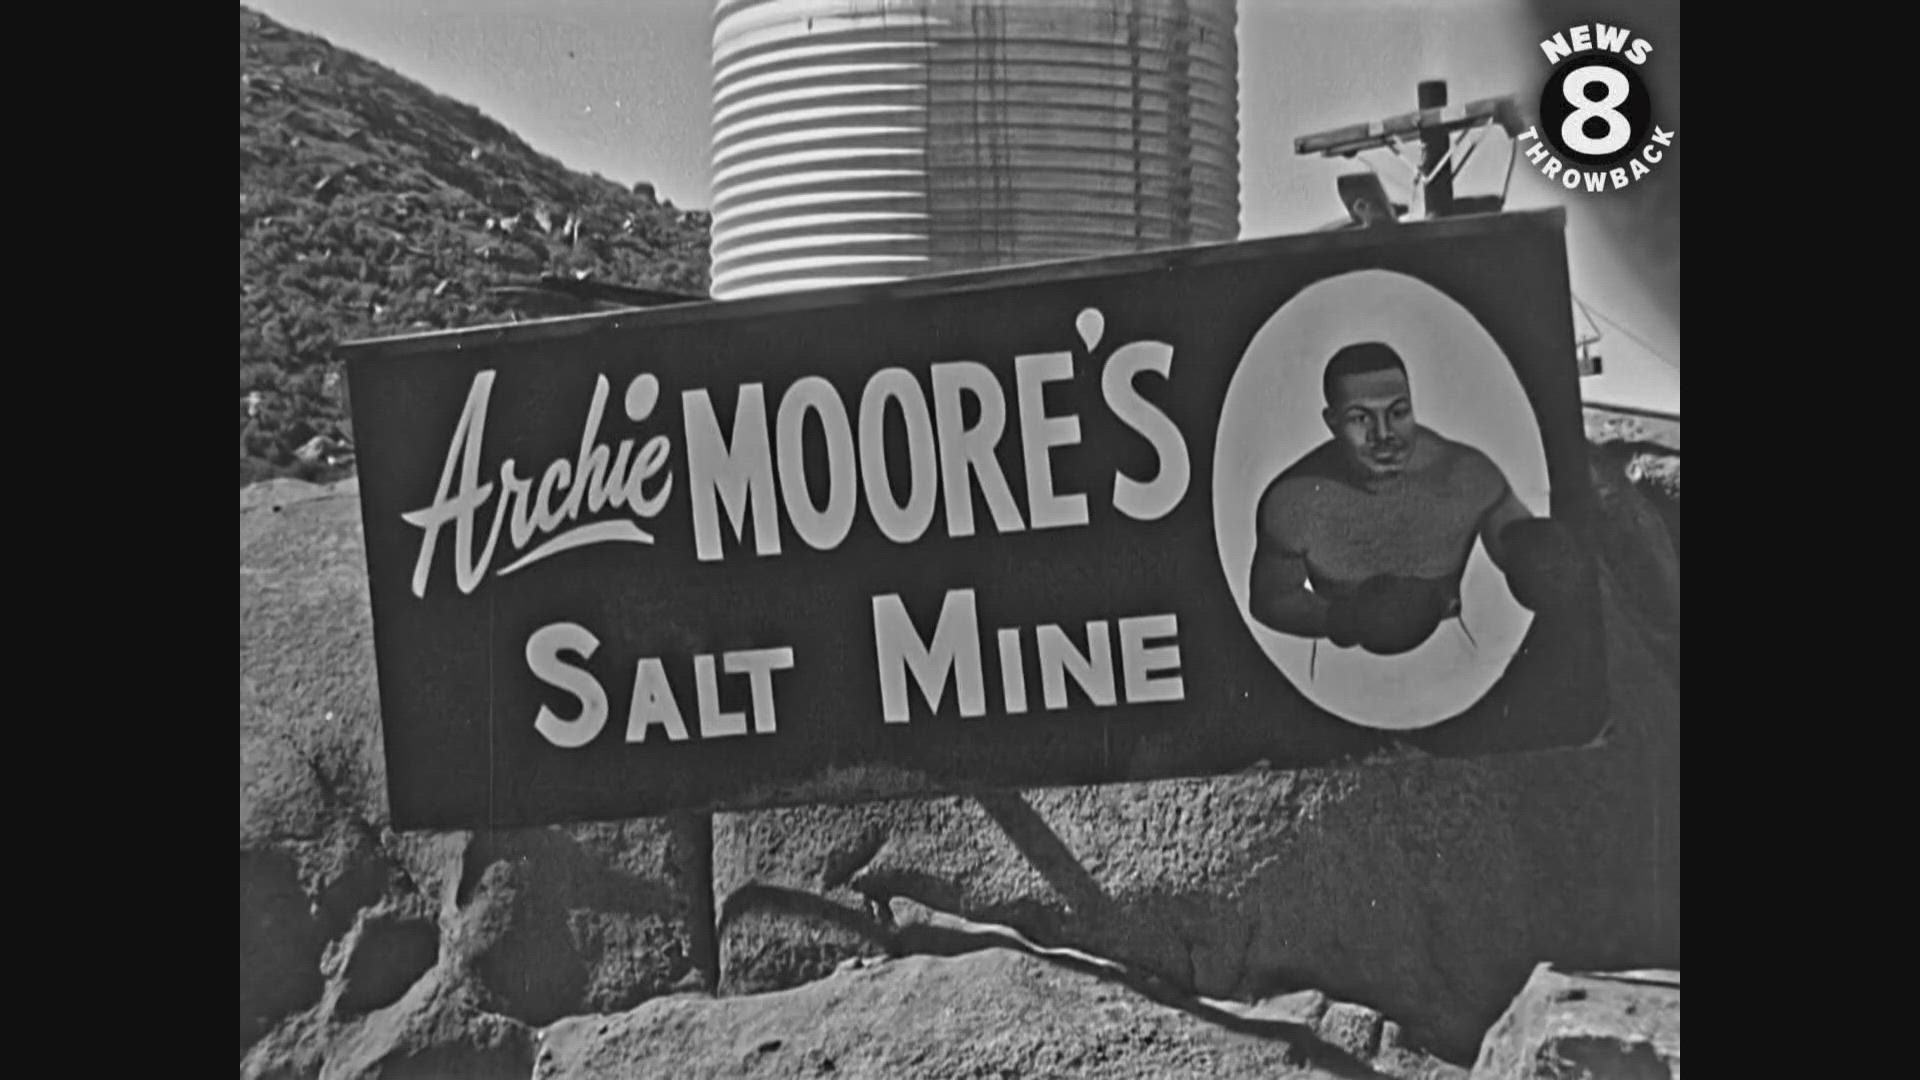 Archie Moore’s Salt Mine is a training campsite near Ramona.